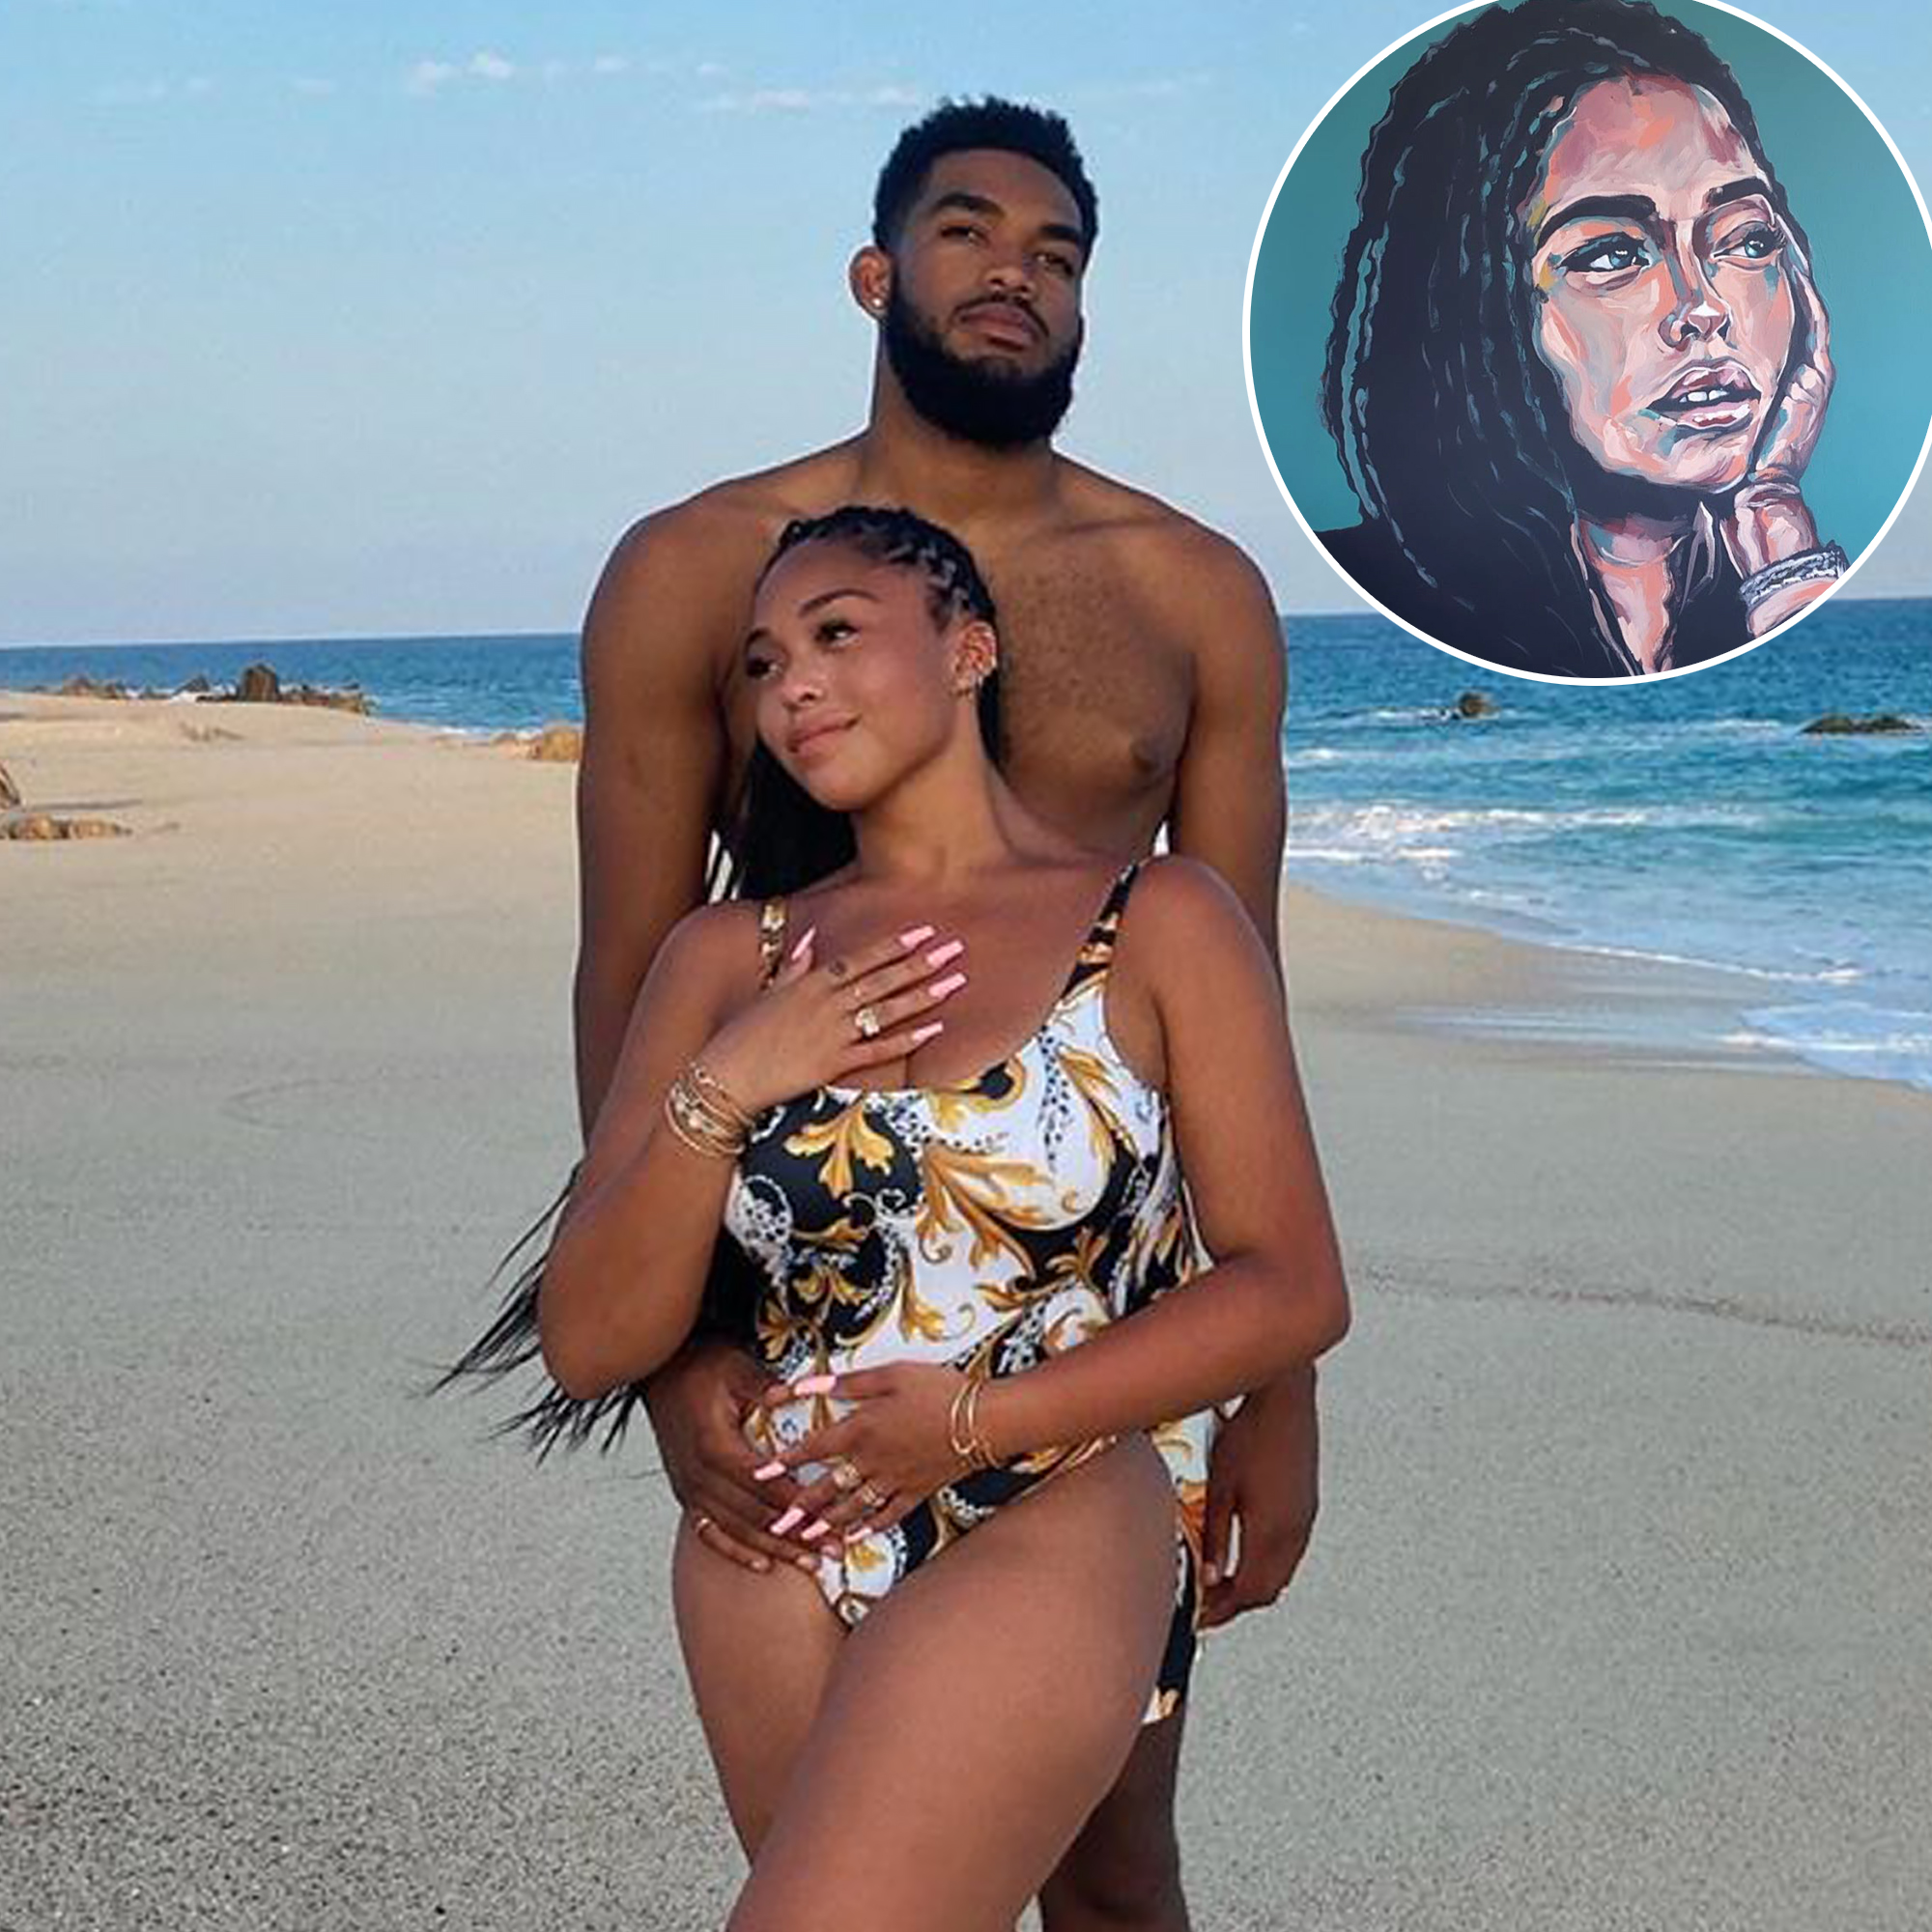 Black Nude Beach Sex Couples - Jordyn Woods' Boyfriend Karl-Anthony Towns Gifts Her Self-Portrait